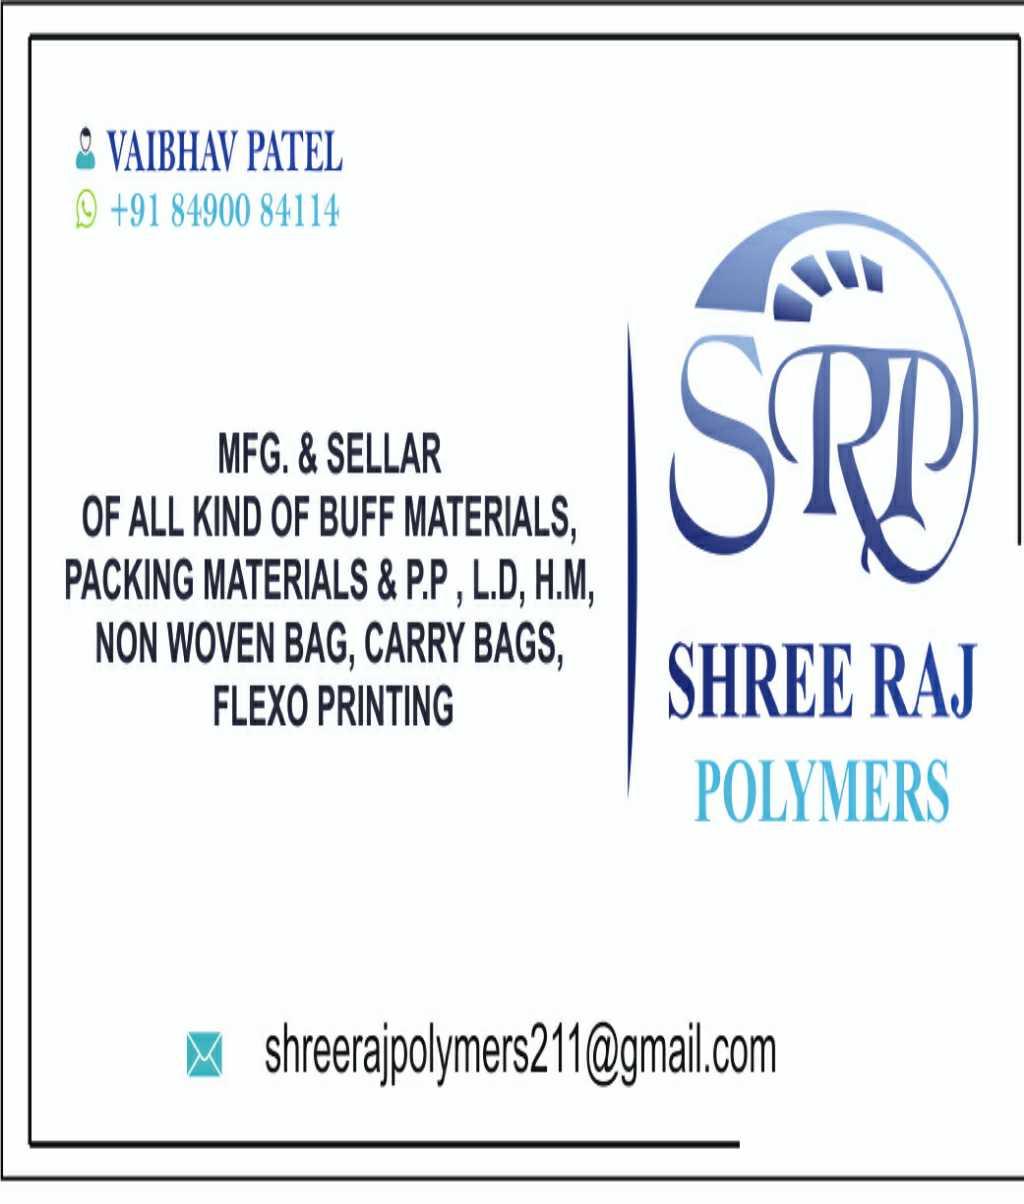 Belshree Raj Polymers